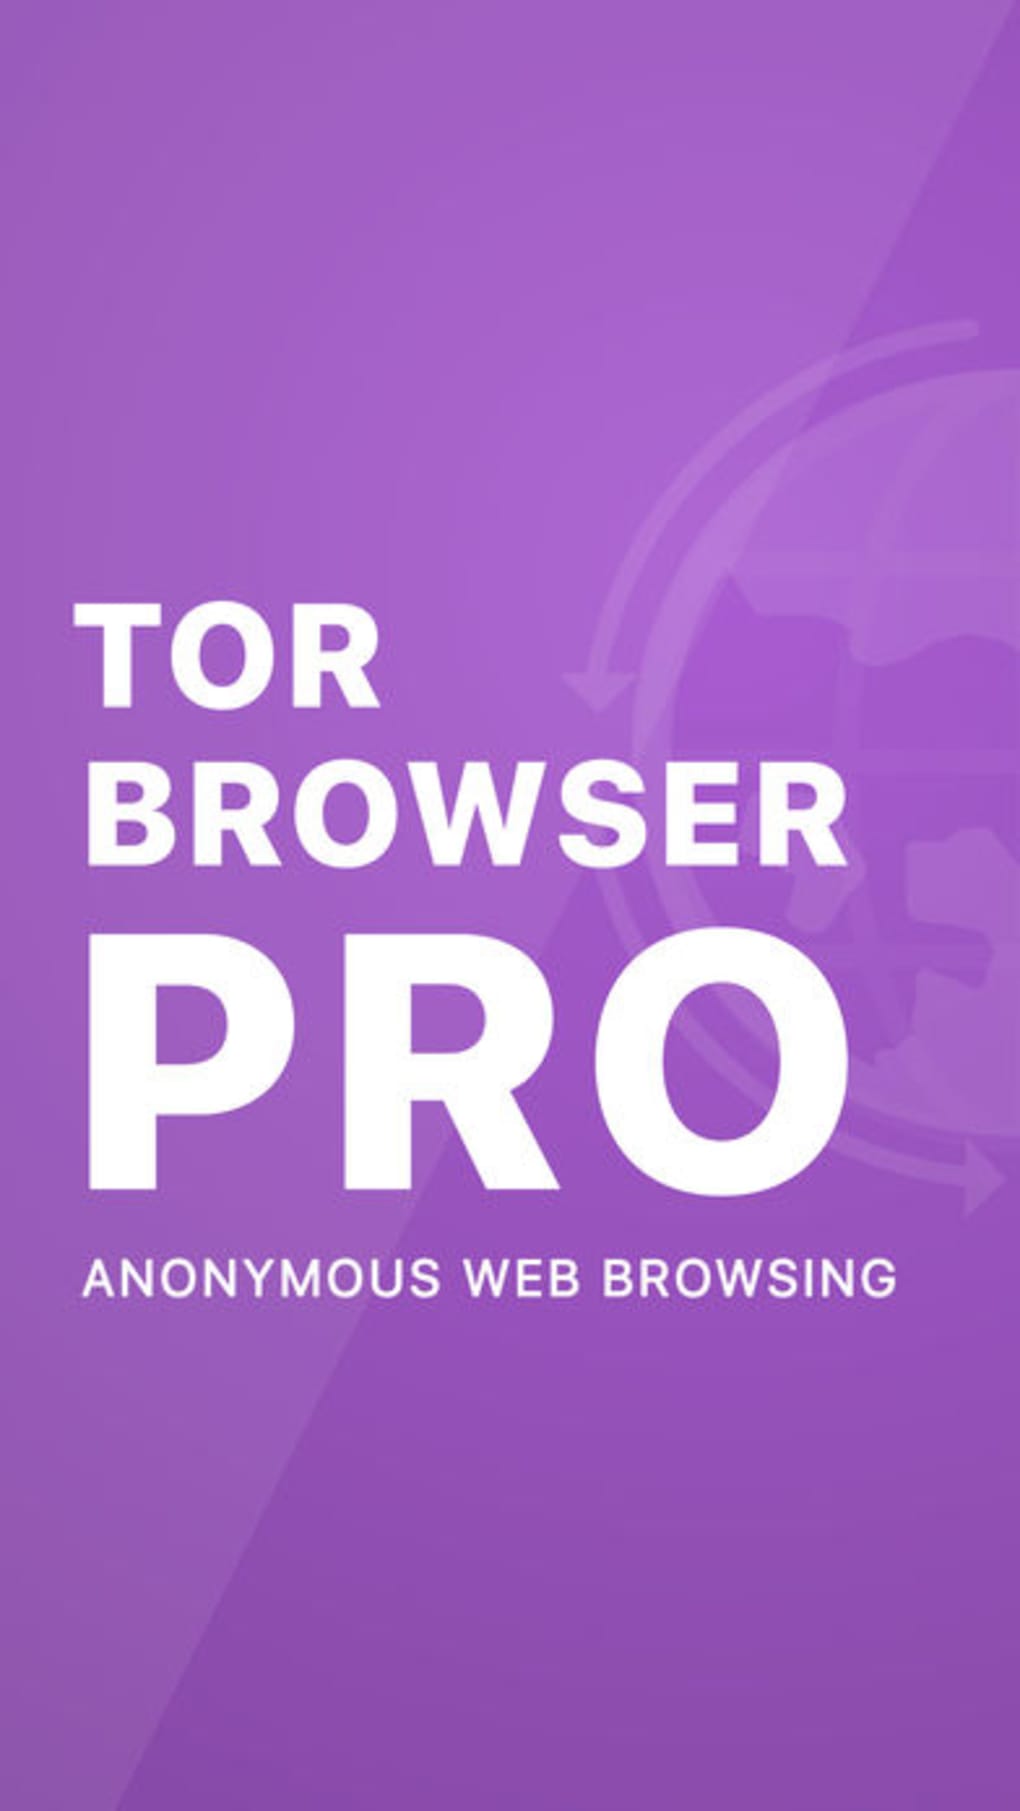 Tor browser ios бесплатно mega топ 5 сайтов даркнет mega вход